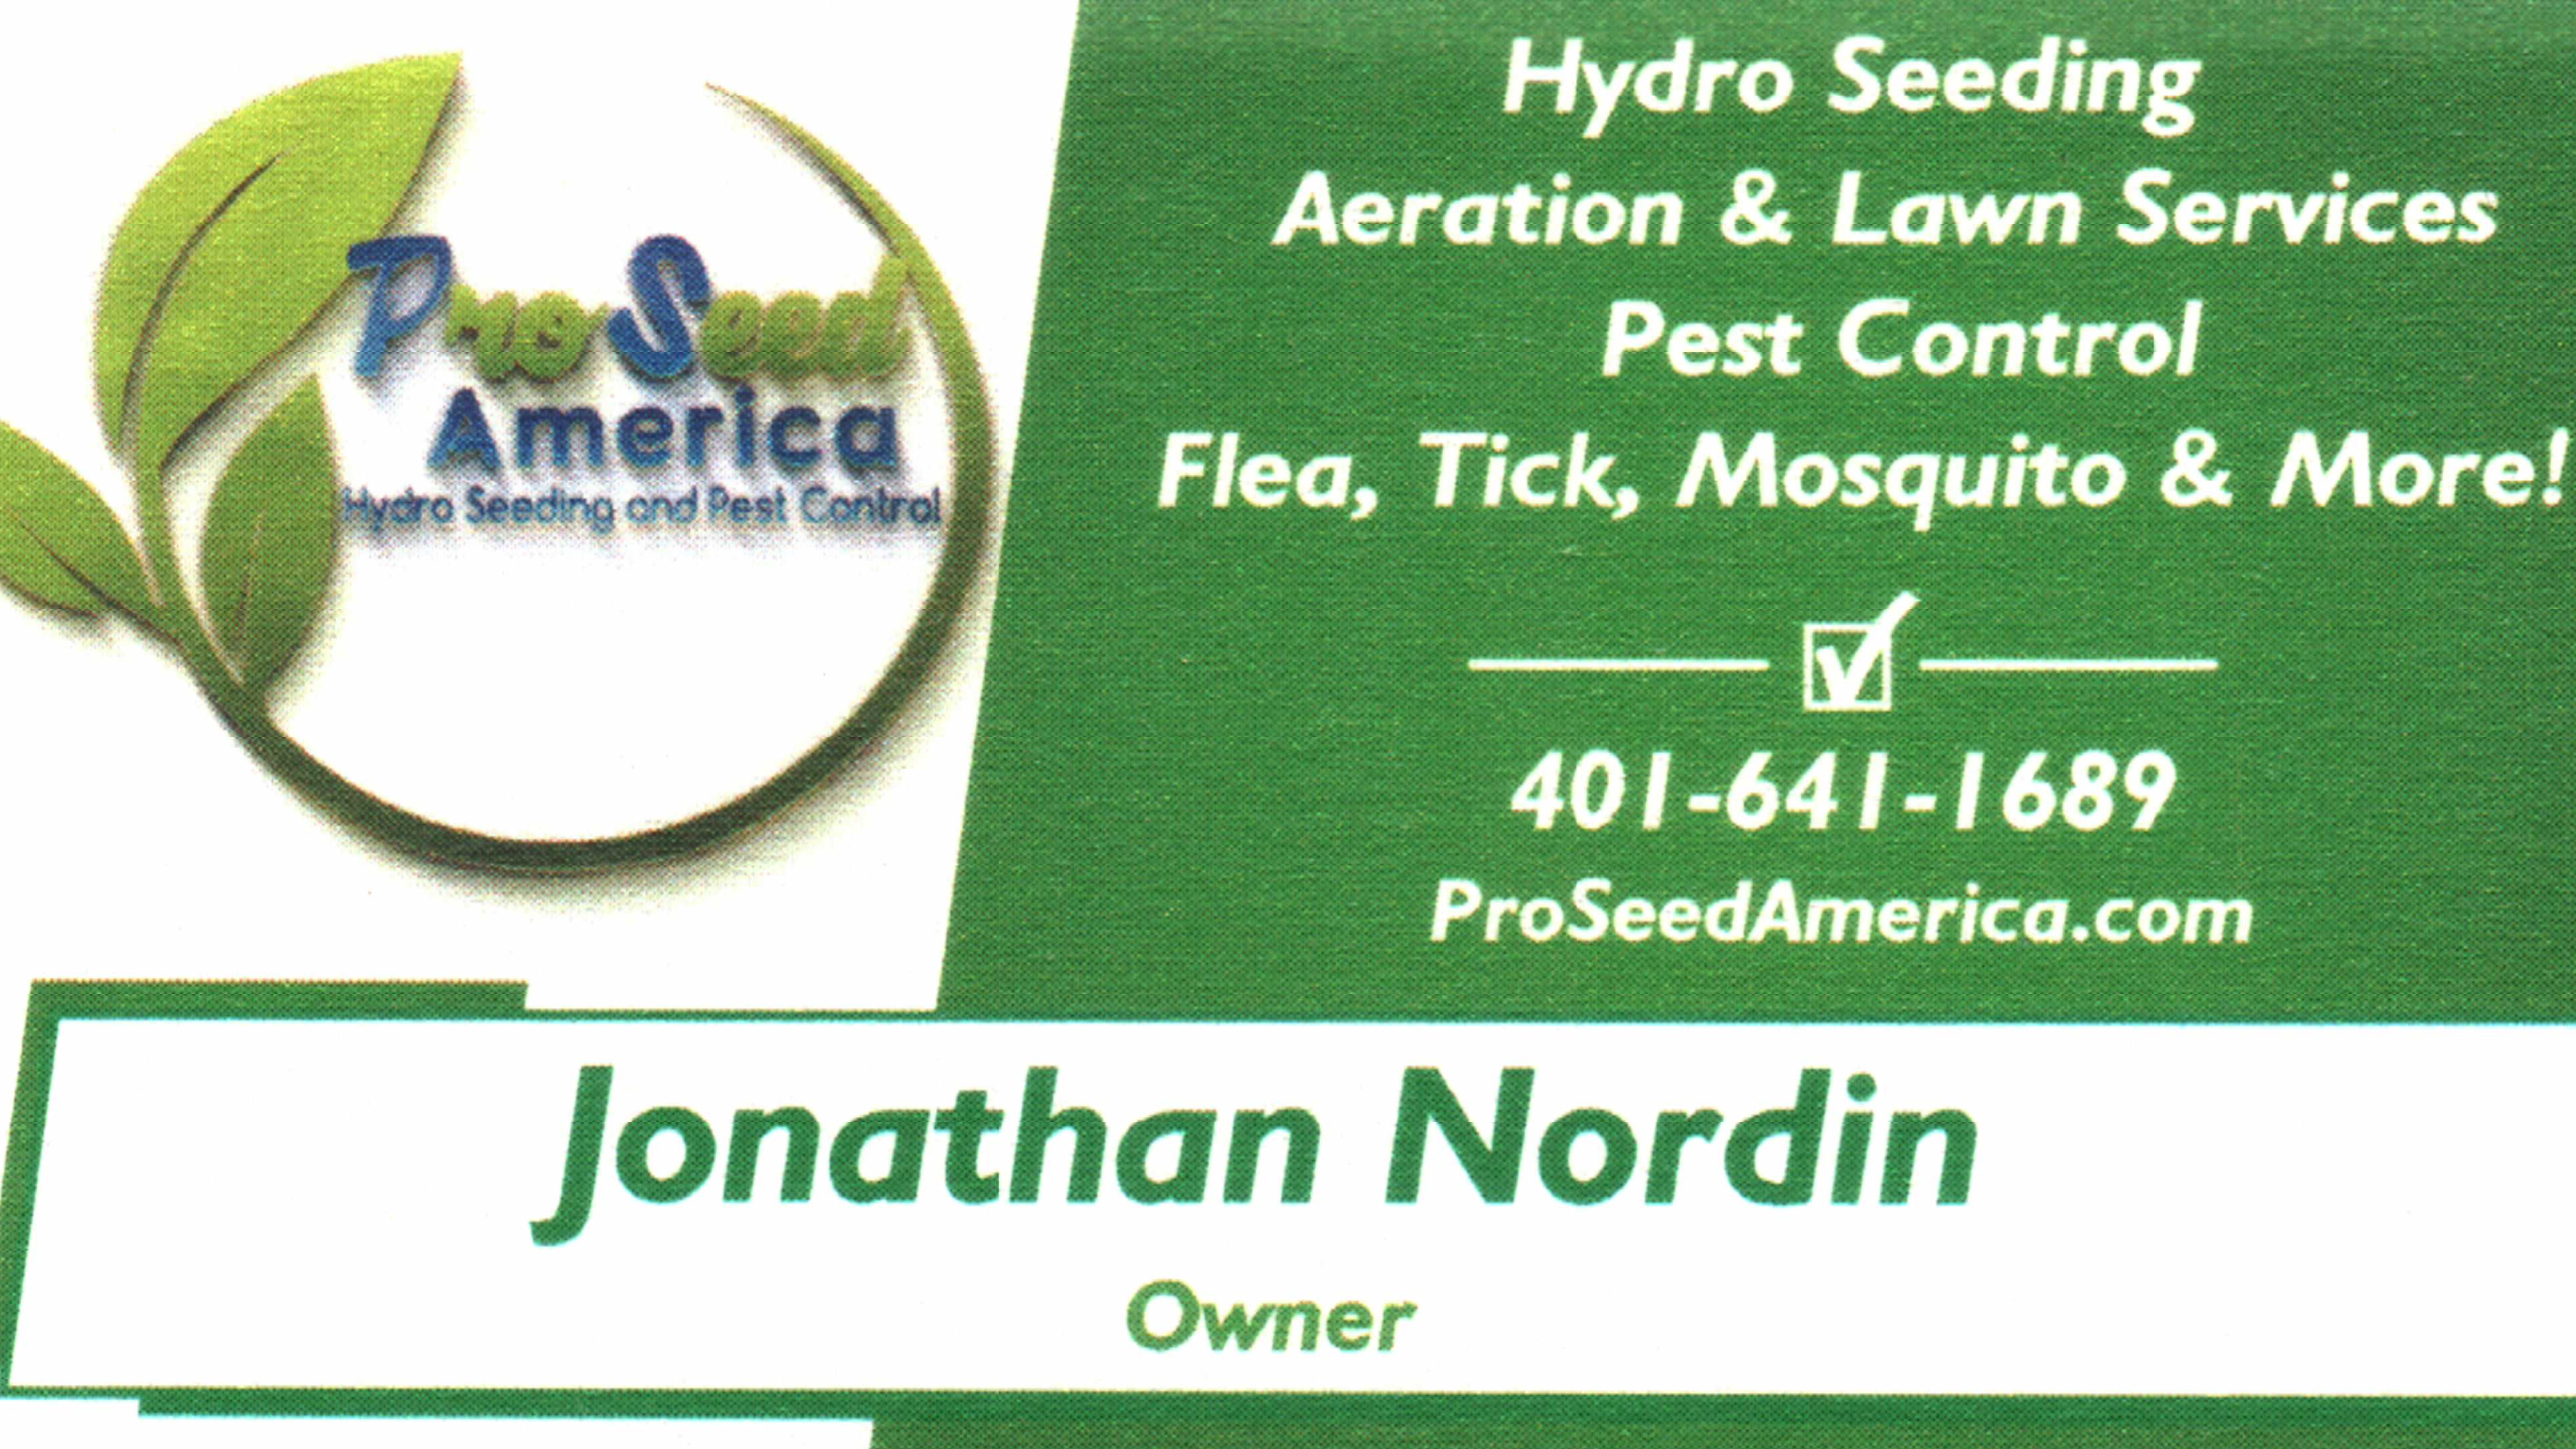 Pro Seed America